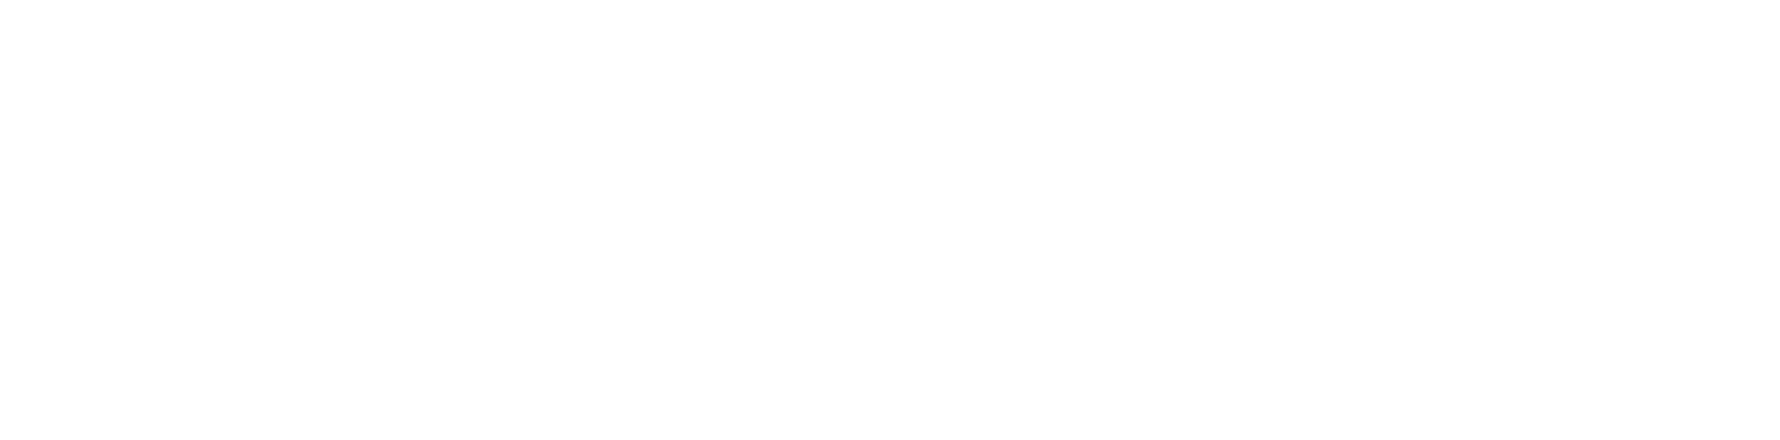 www.greenparty.org.uk